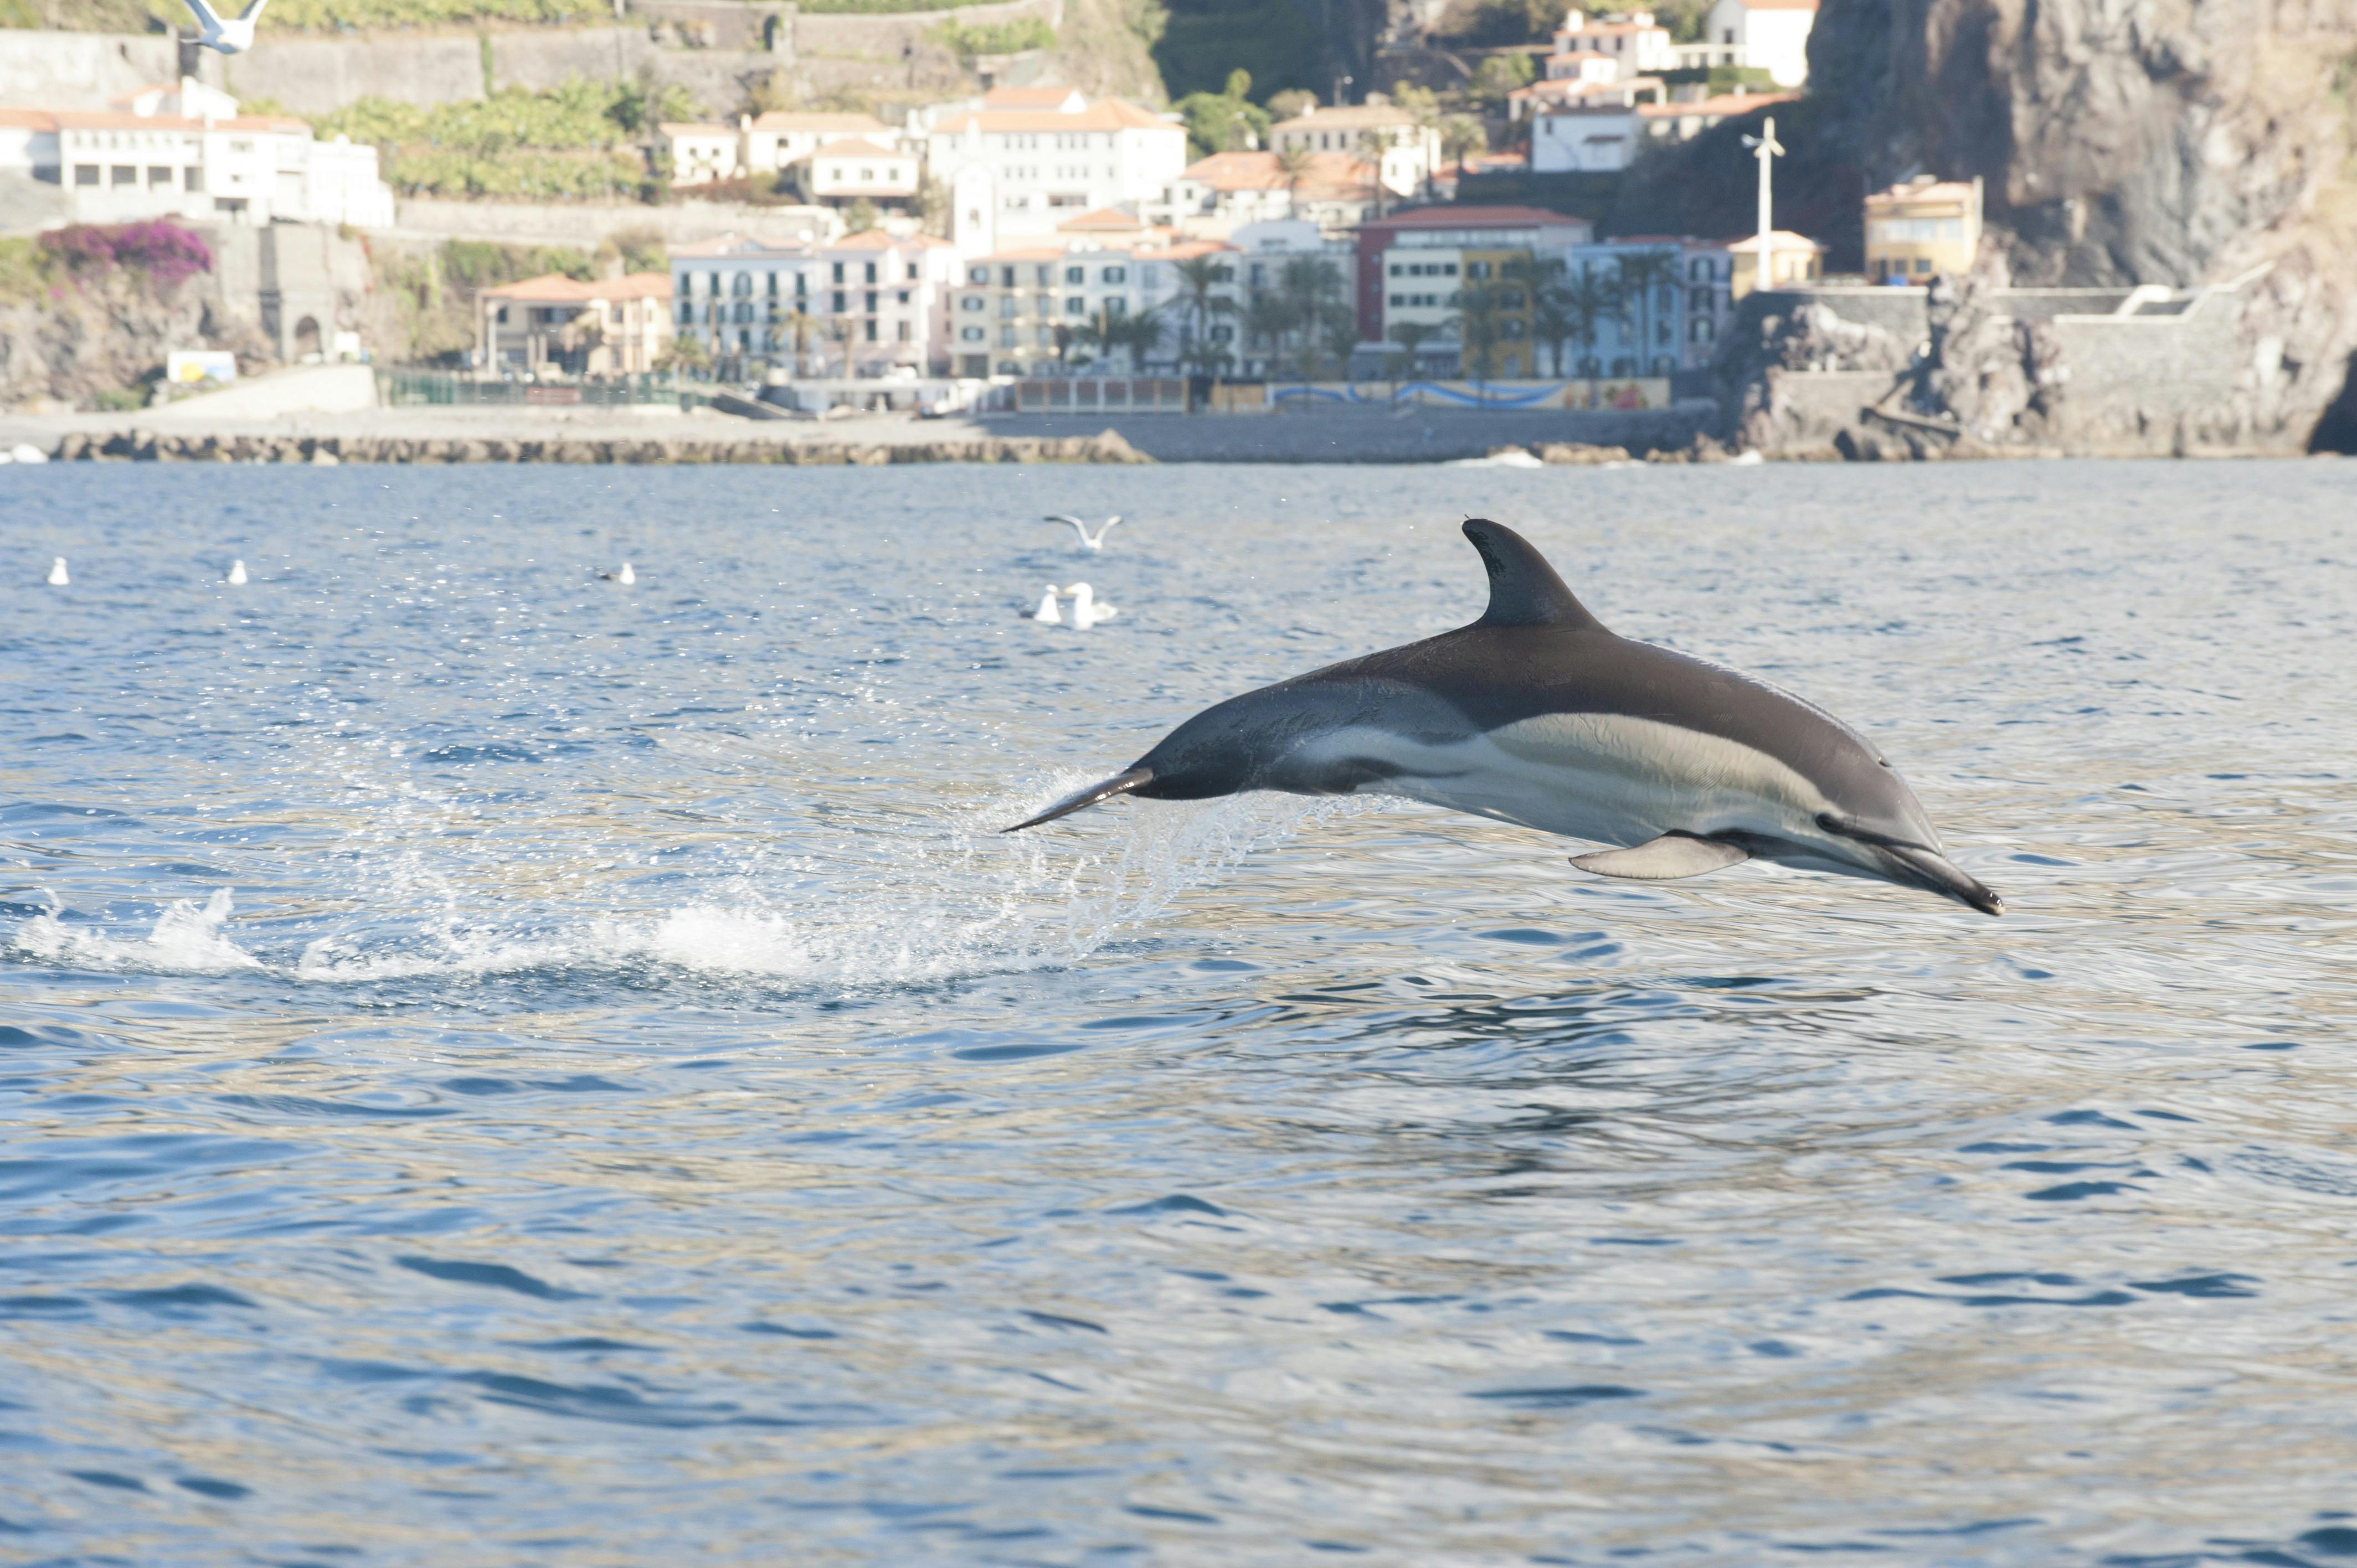 Ribeira Brava Dolphin and Whale Watching Cruise